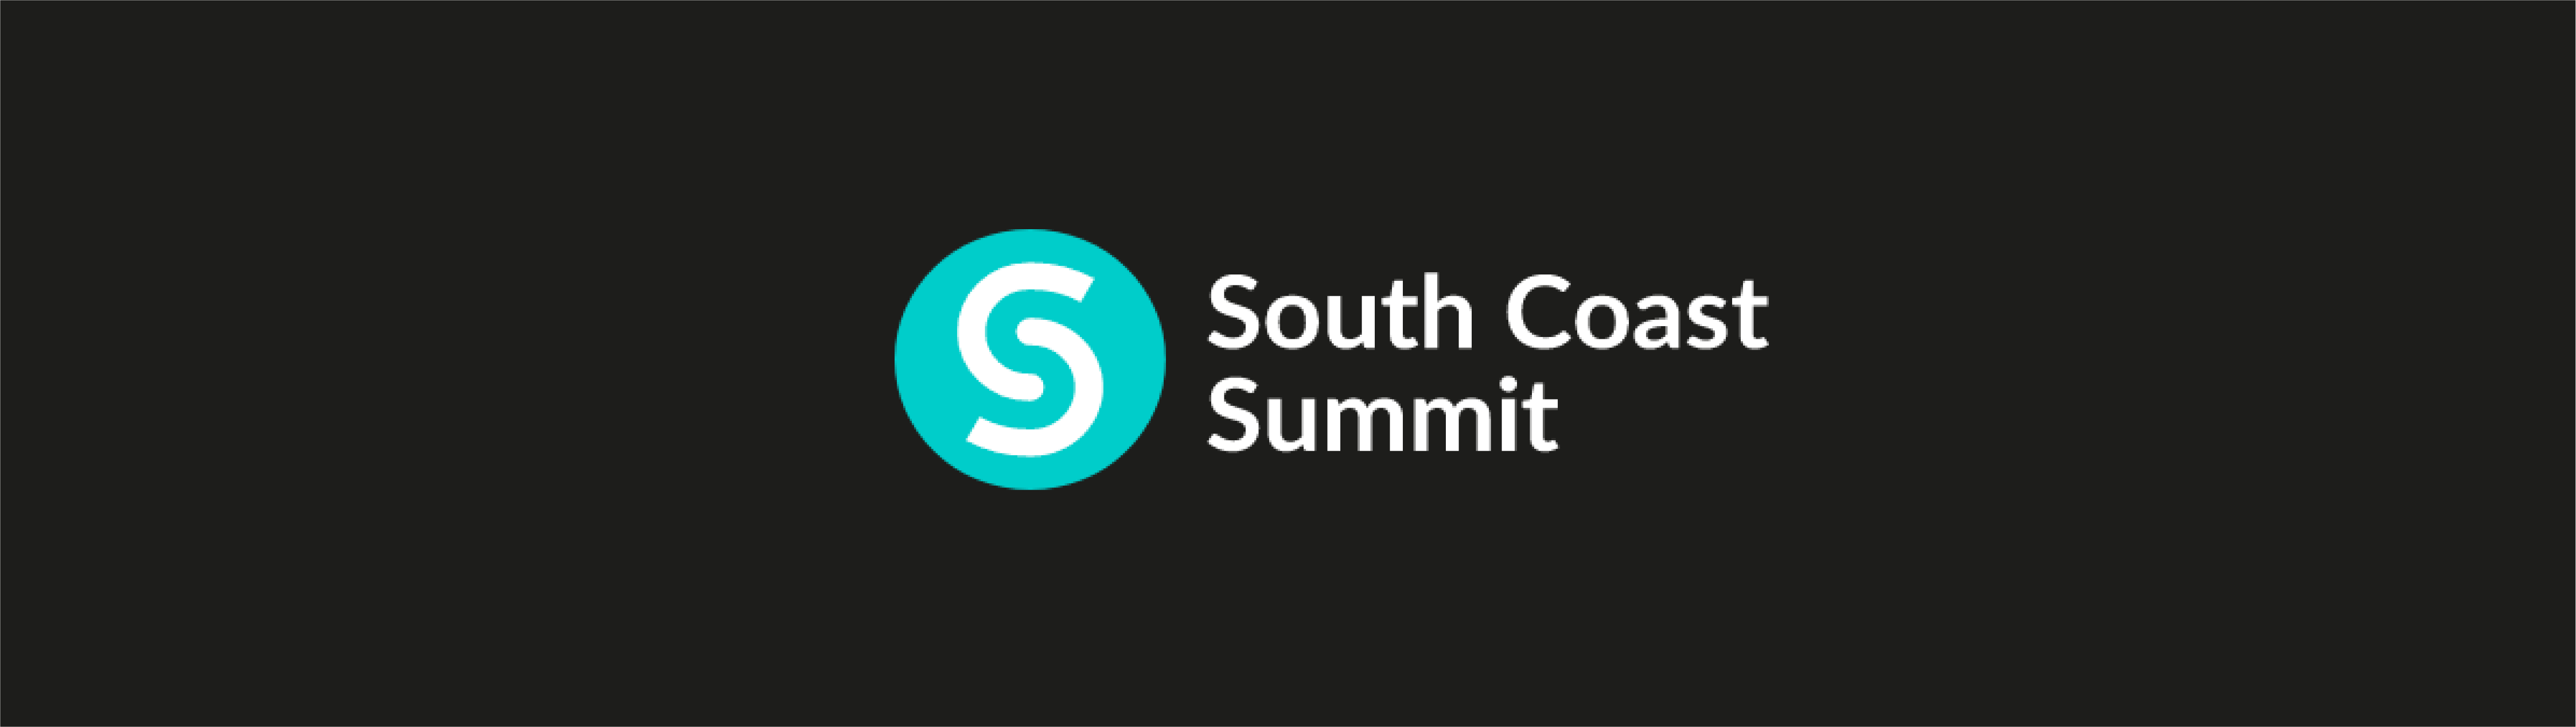 South Coast Summit Axazure